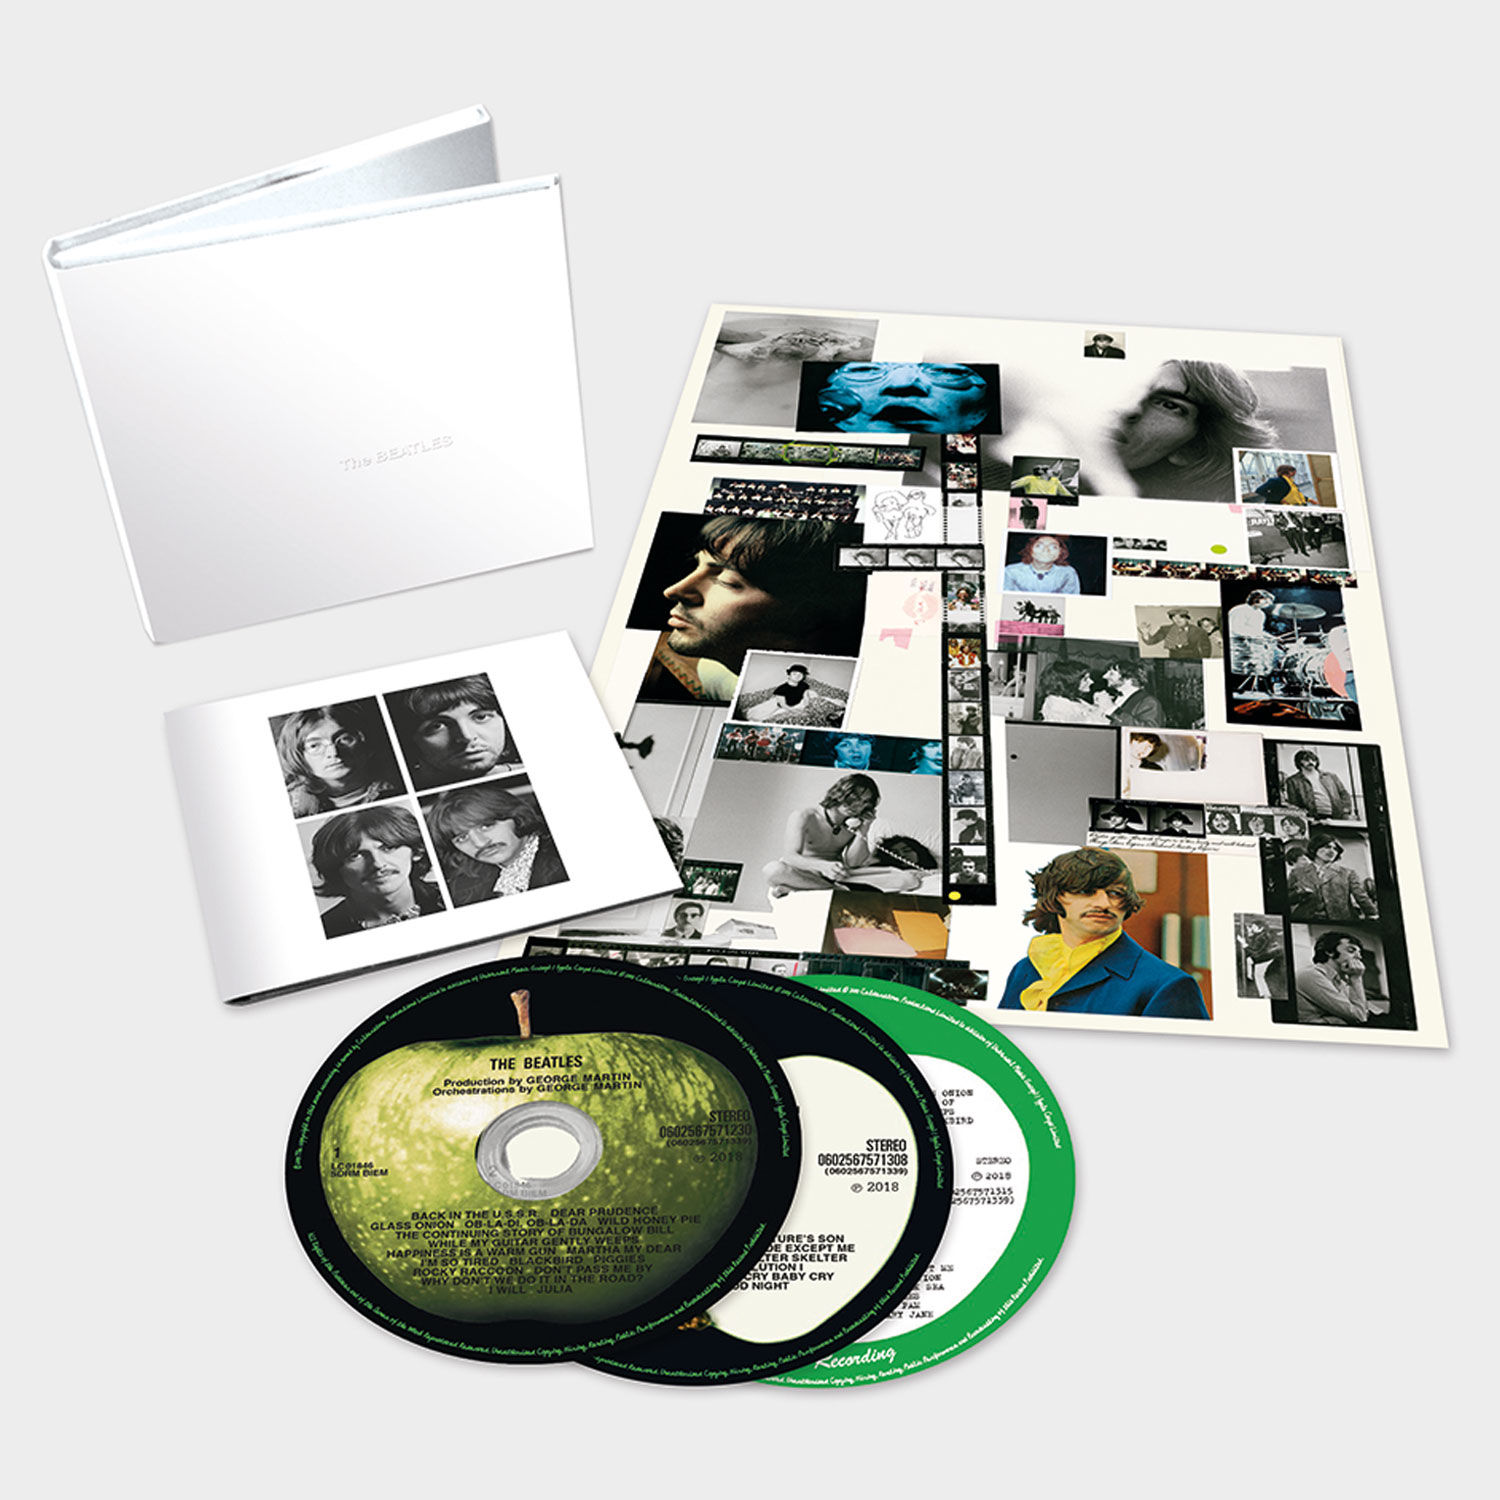 The Beatles - White Album (Esher Demos)